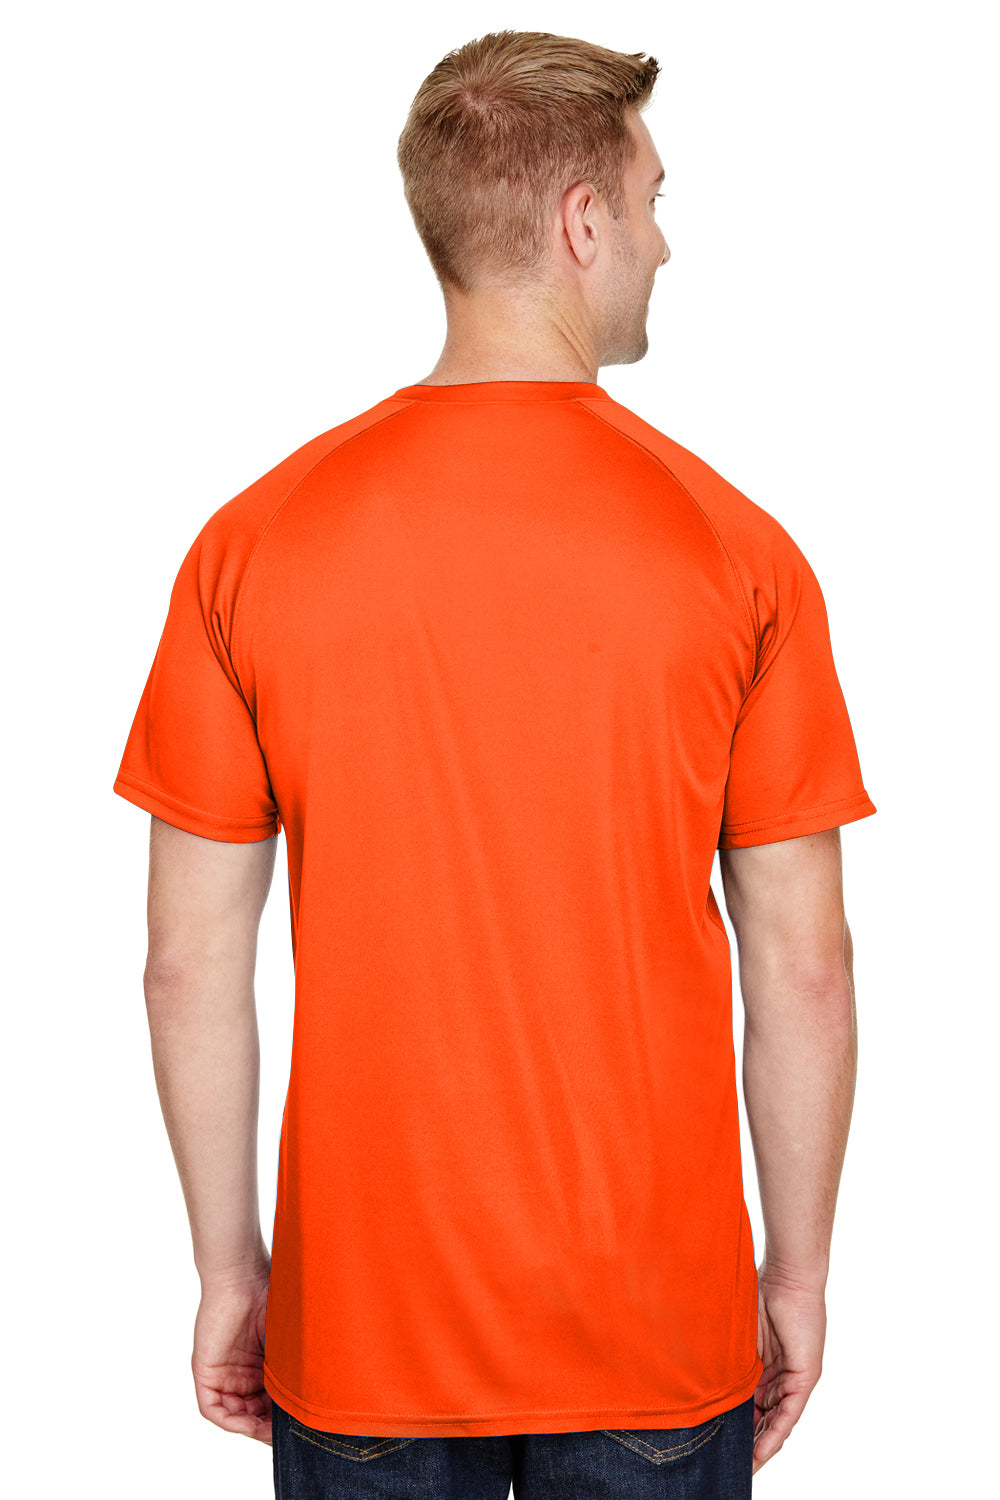 Augusta Sportswear AG1565 Mens Attain 2 Moisture Wicking Button Short Sleeve Baseball Jersey Orange Model Back